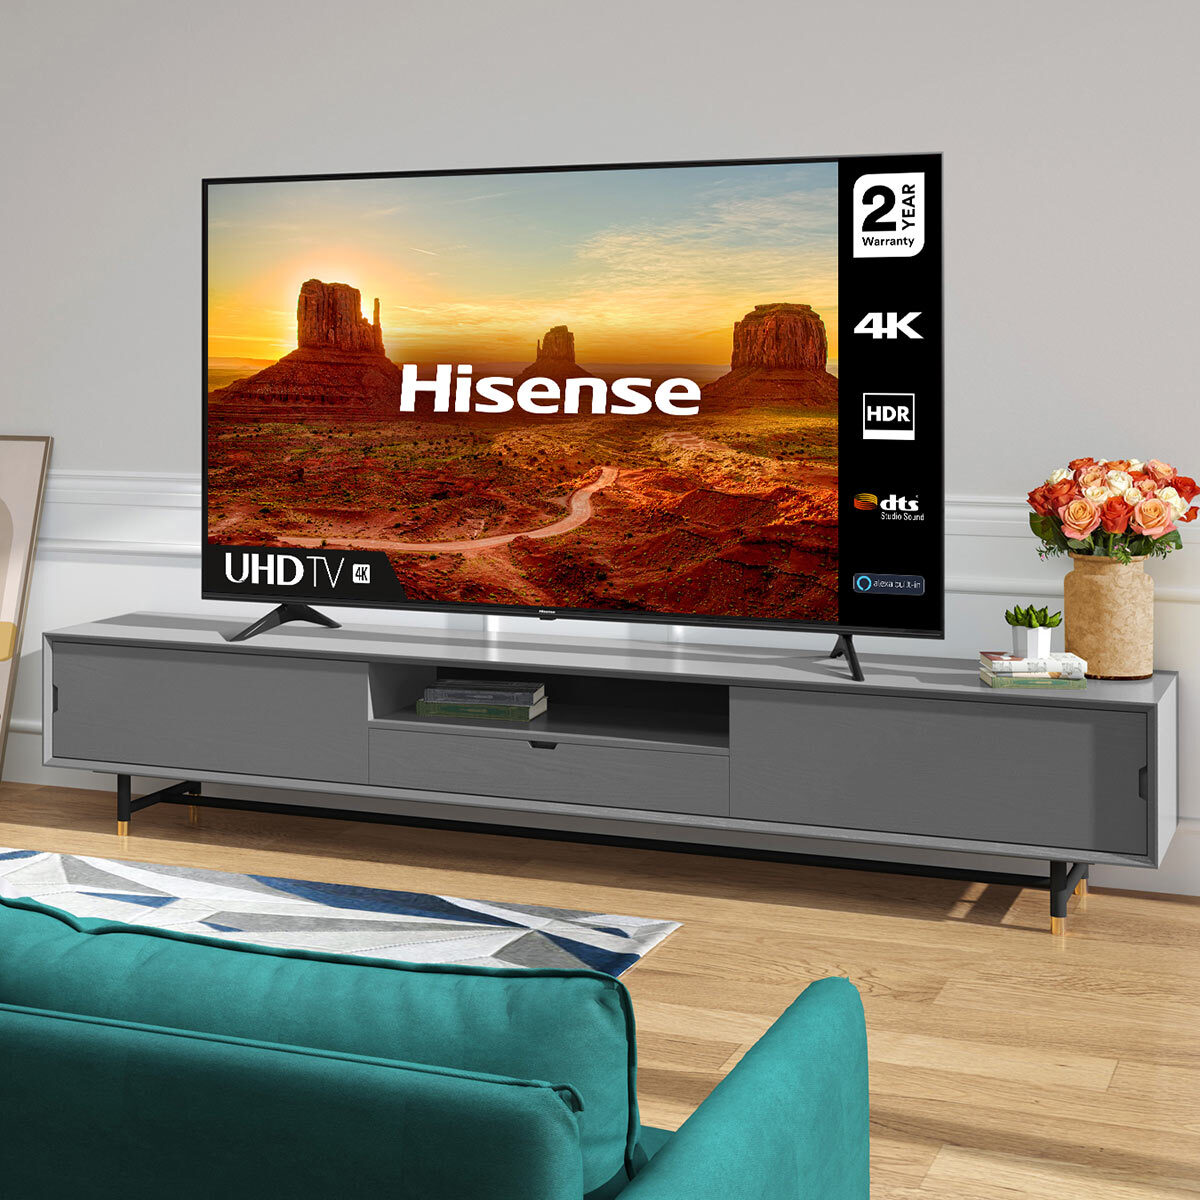 Hisense 55a7100ftuk 55 Inch 4k Ultra Hd Smart Tv Costco Uk